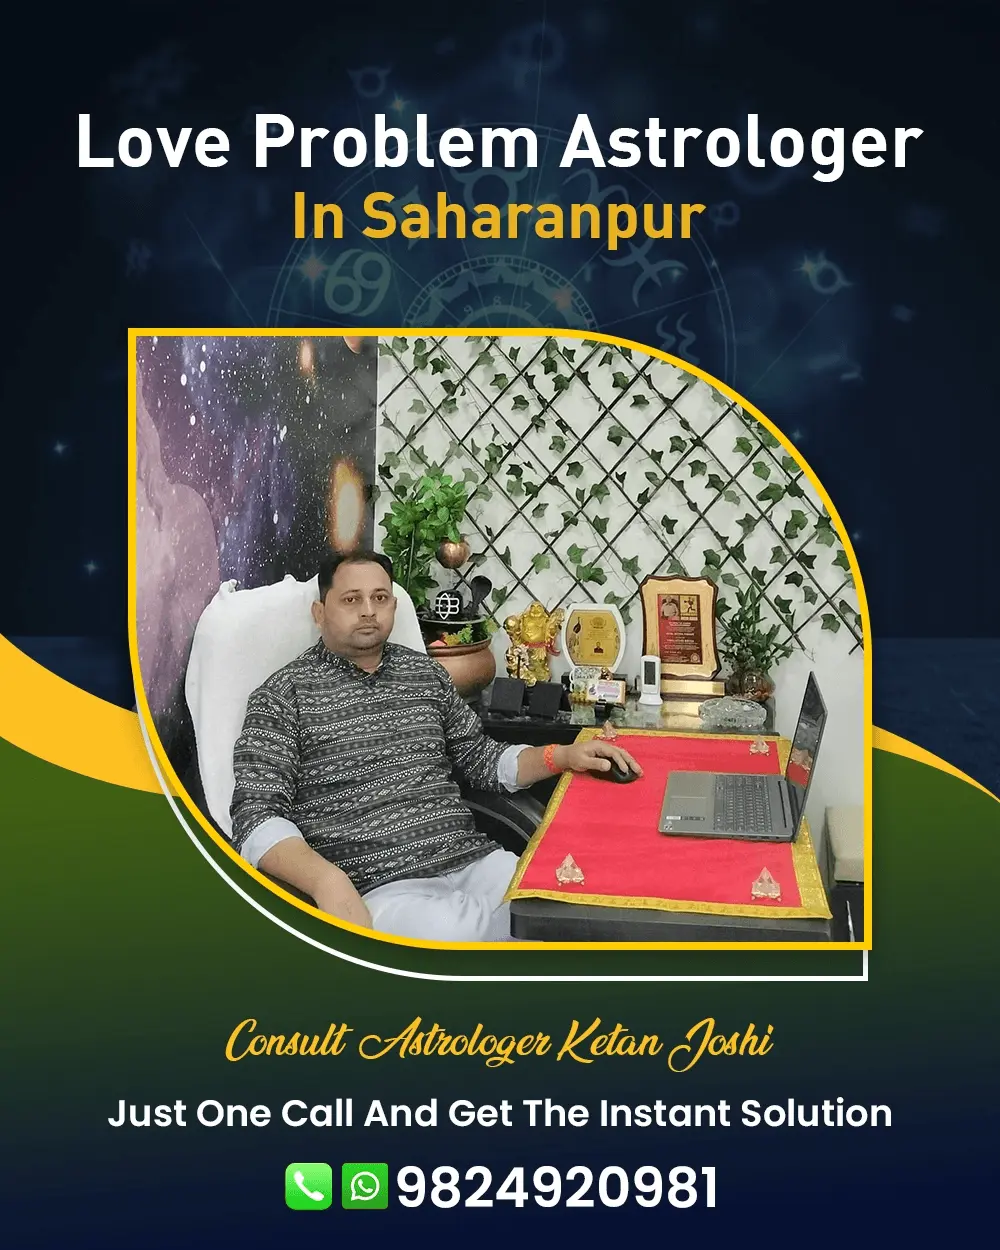 Love Problem Astrologer In Saharanpur